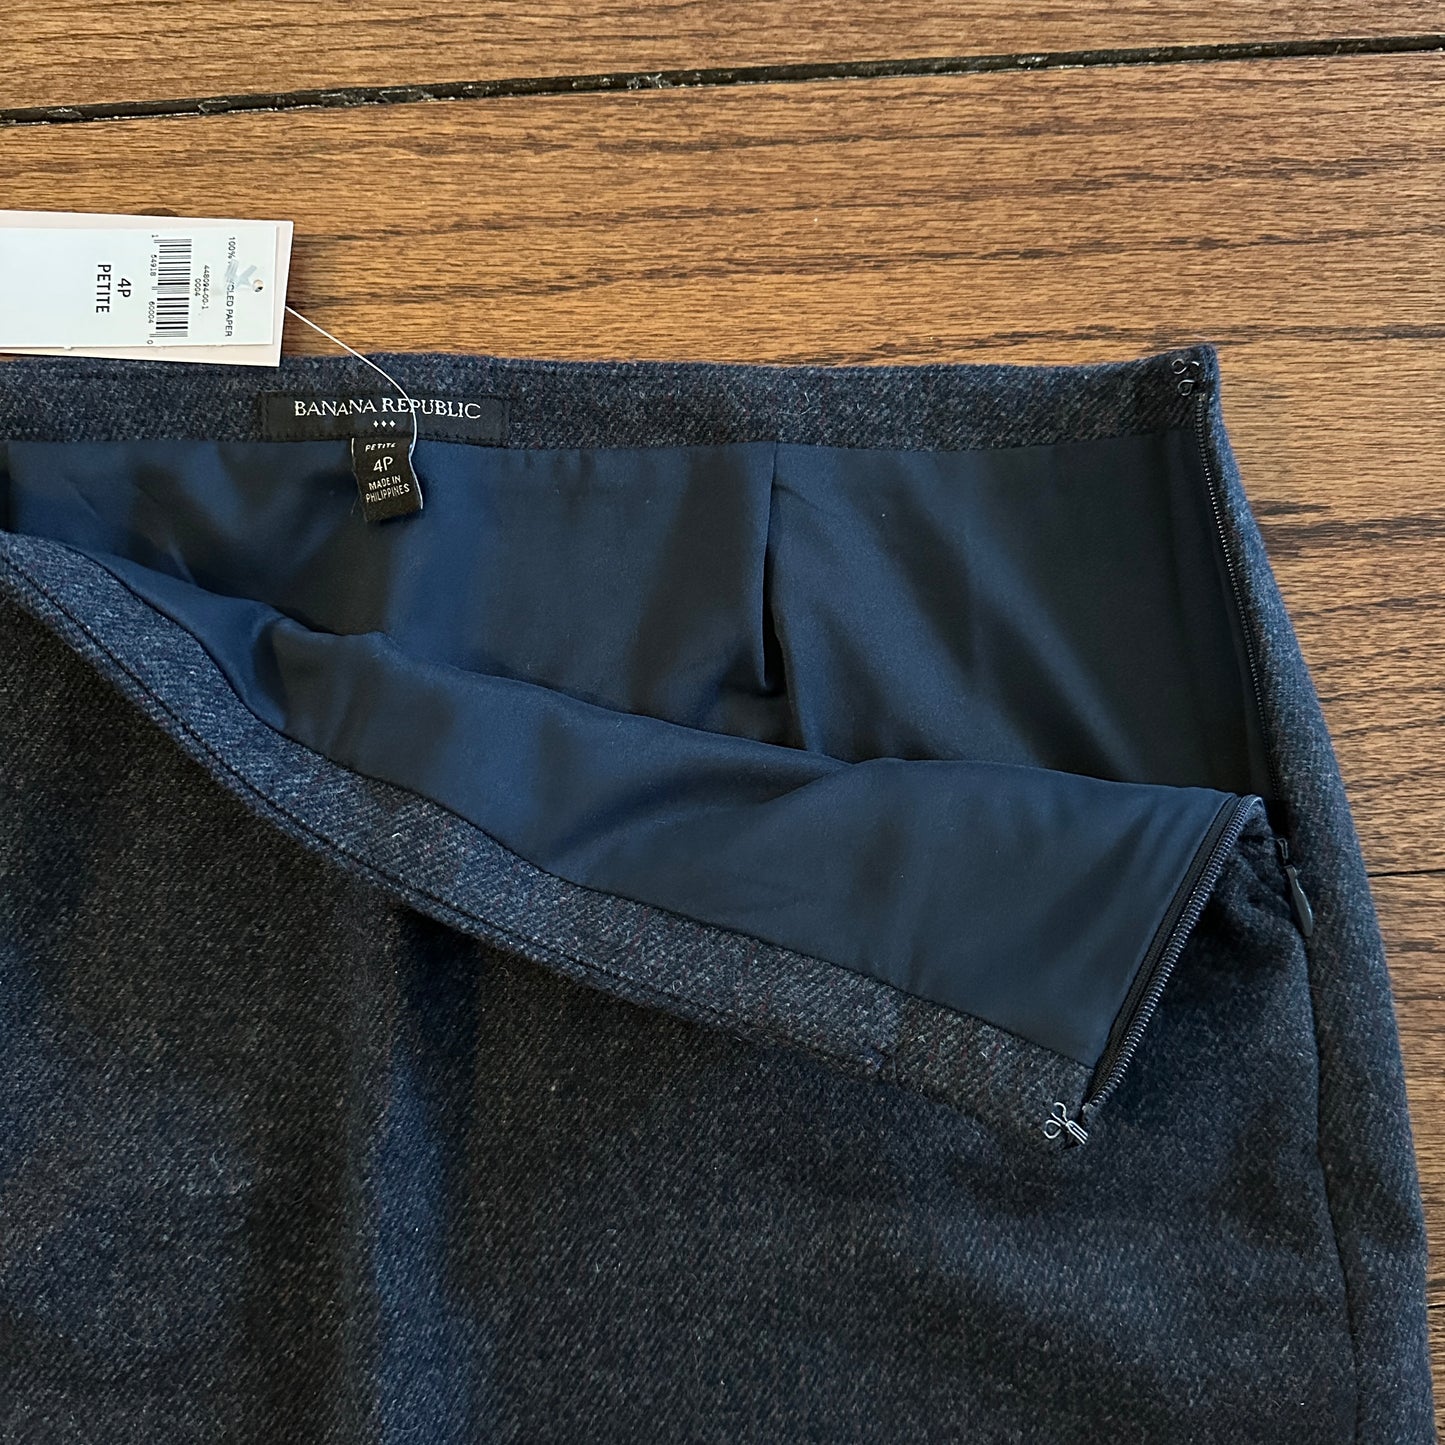 NWT Women's Banana Republic Mini Skirt with Pockets, Navy Blue - size 4 petite